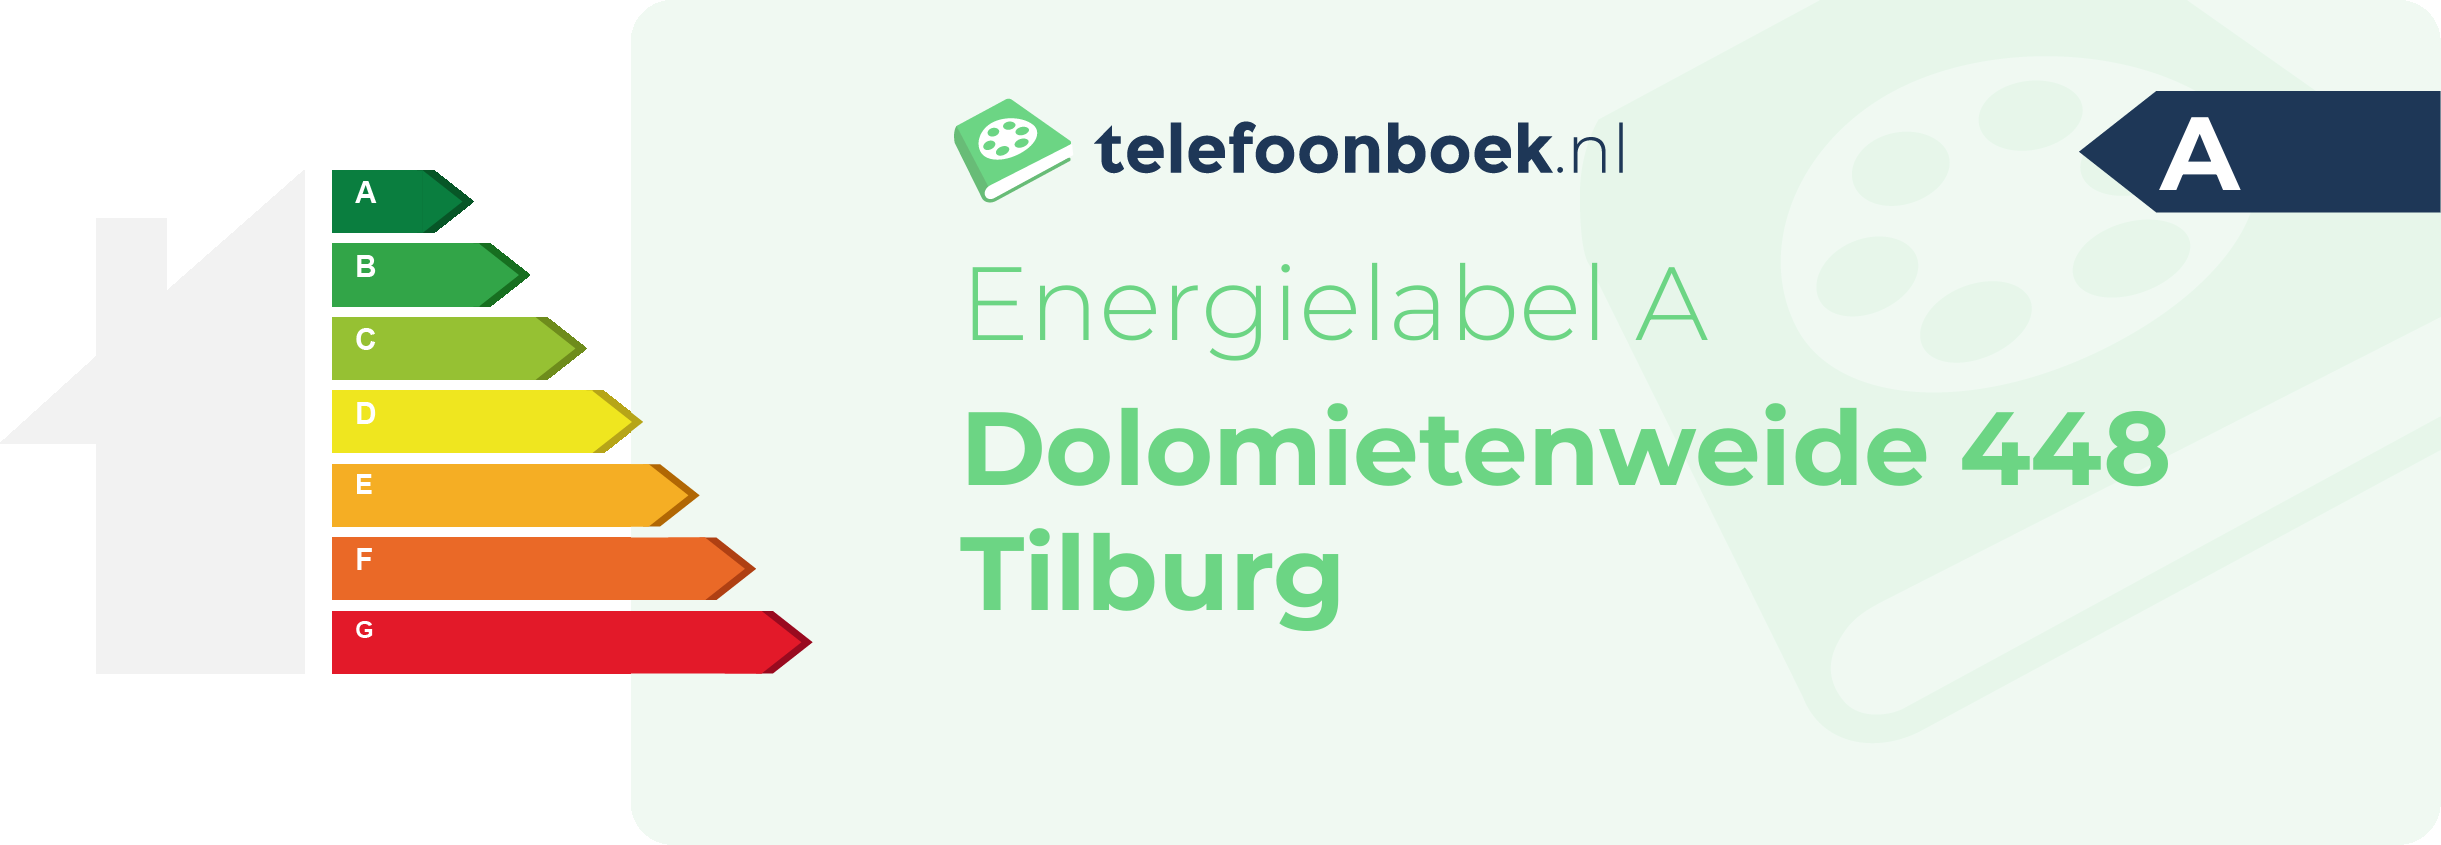 Energielabel Dolomietenweide 448 Tilburg